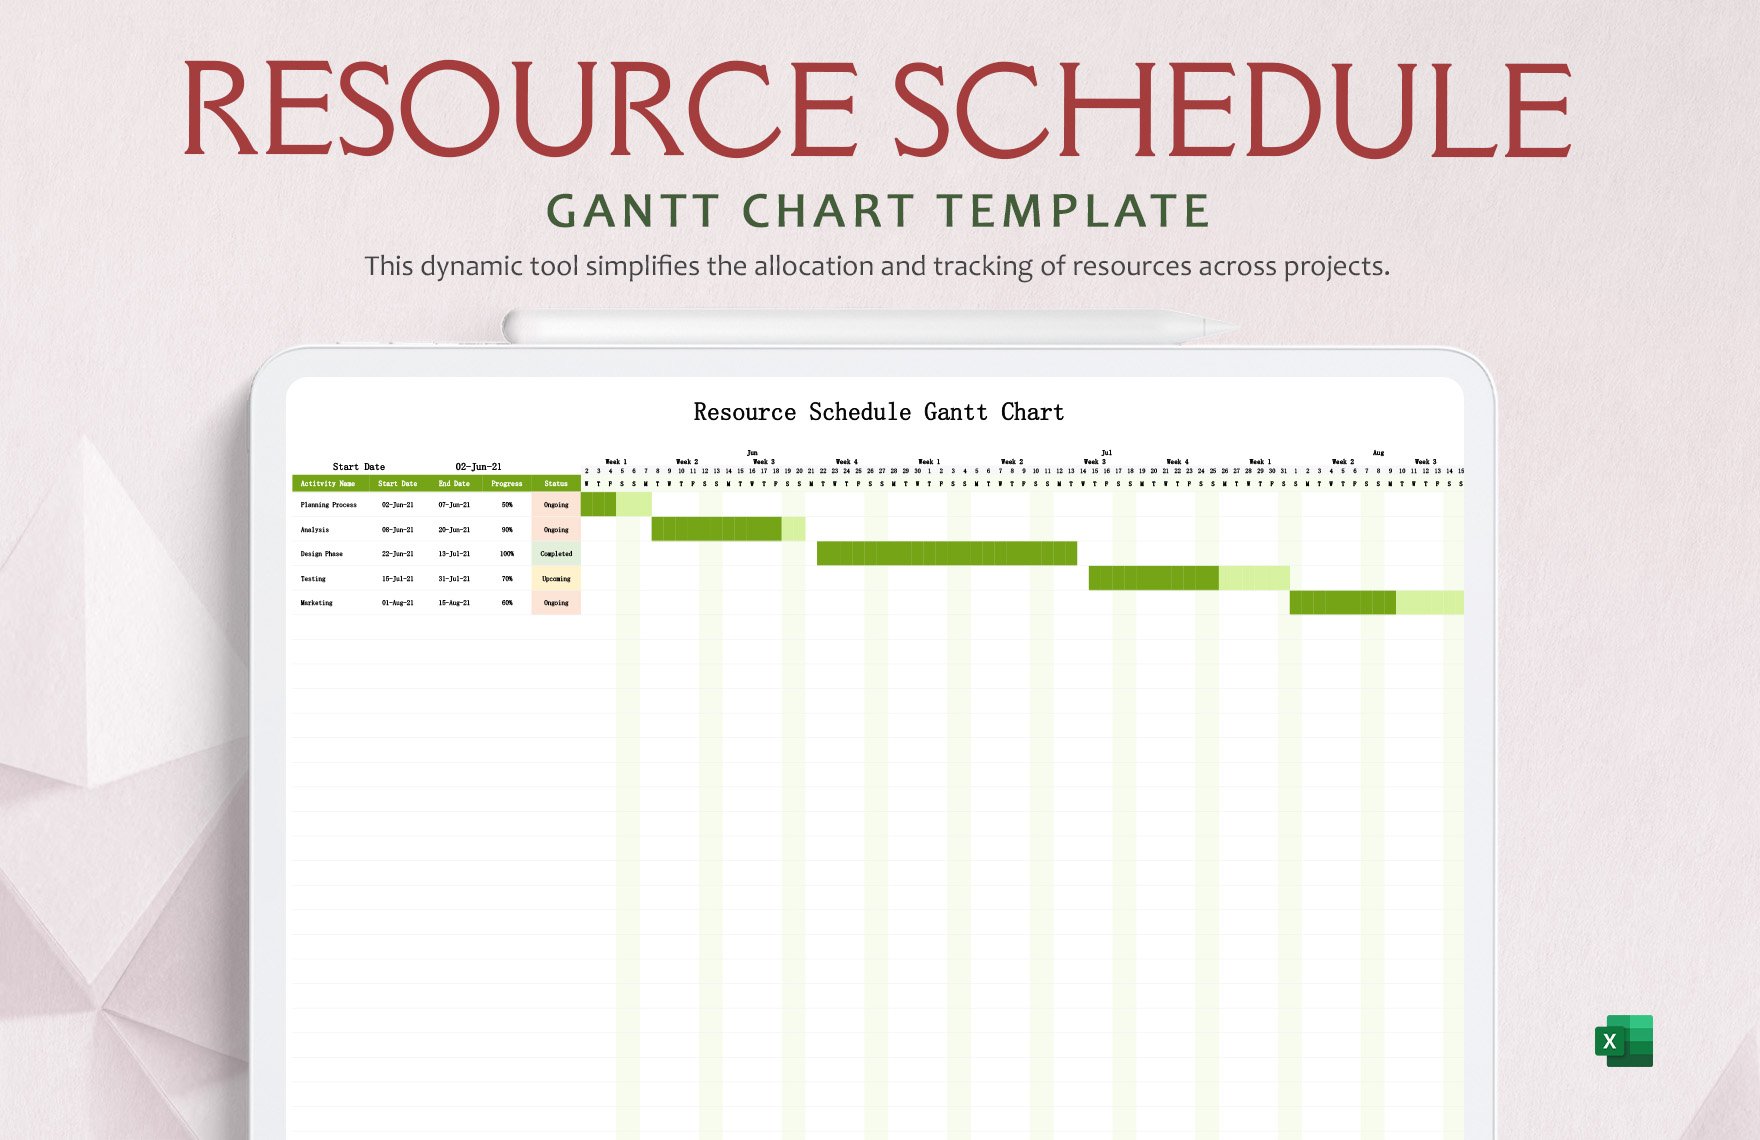 Resource Schedule Gantt Chart Template in Excel